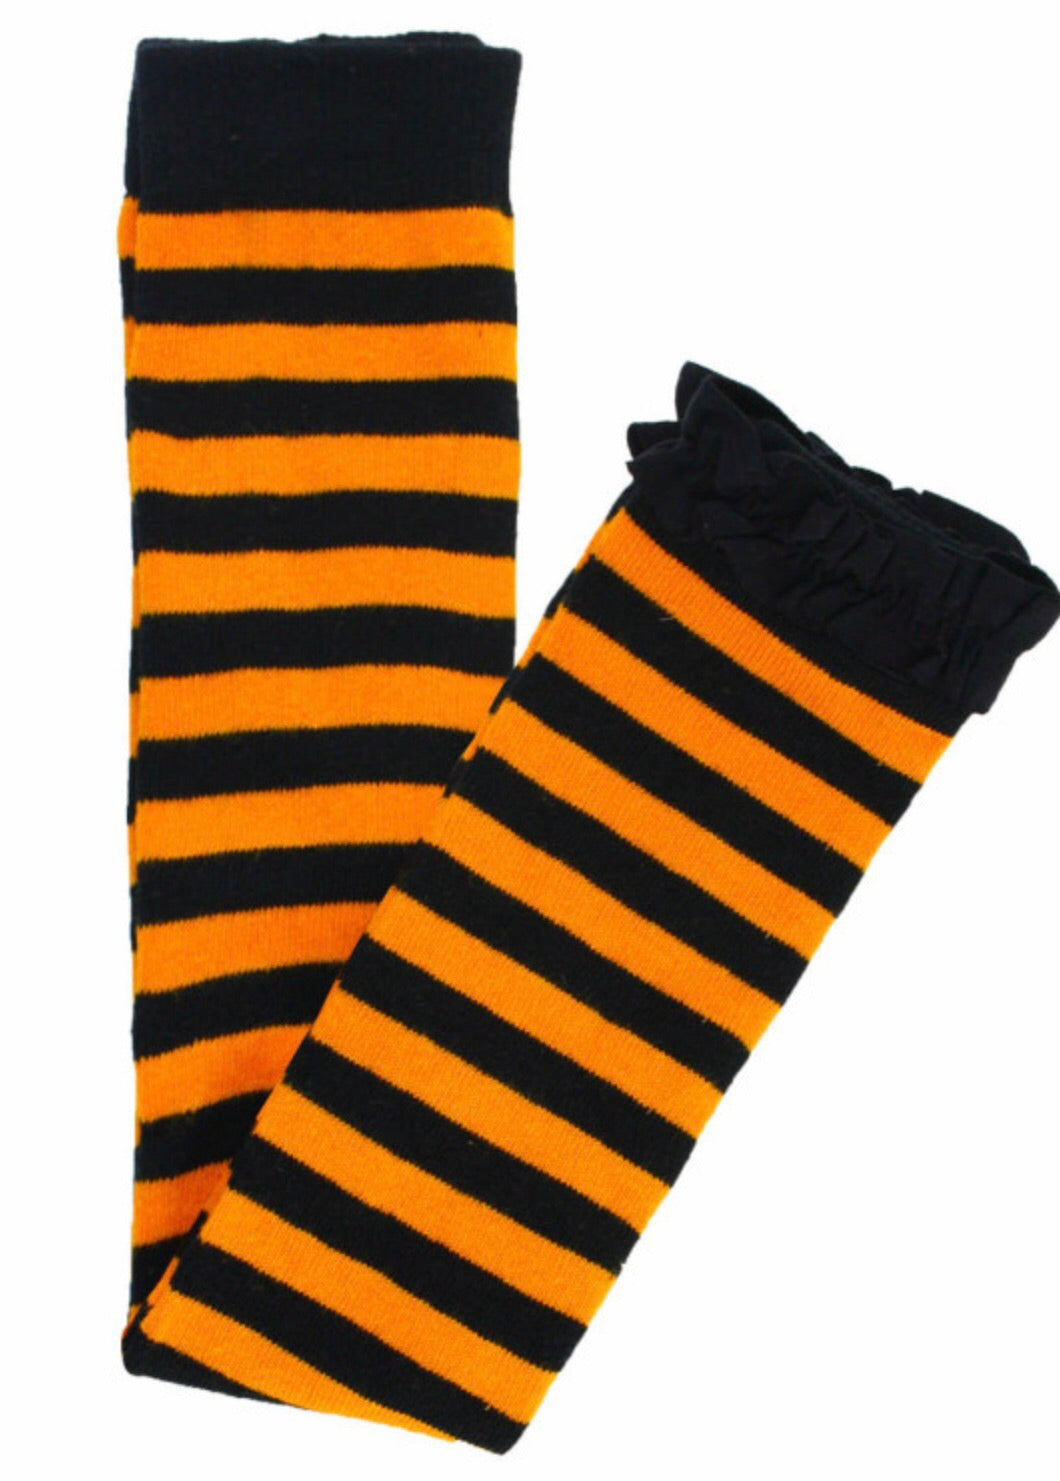 Footless Ruffle Tights in Halloween Stripe Black & Orange Stripes / 0-6 months - Doodlebug's Children's Boutique